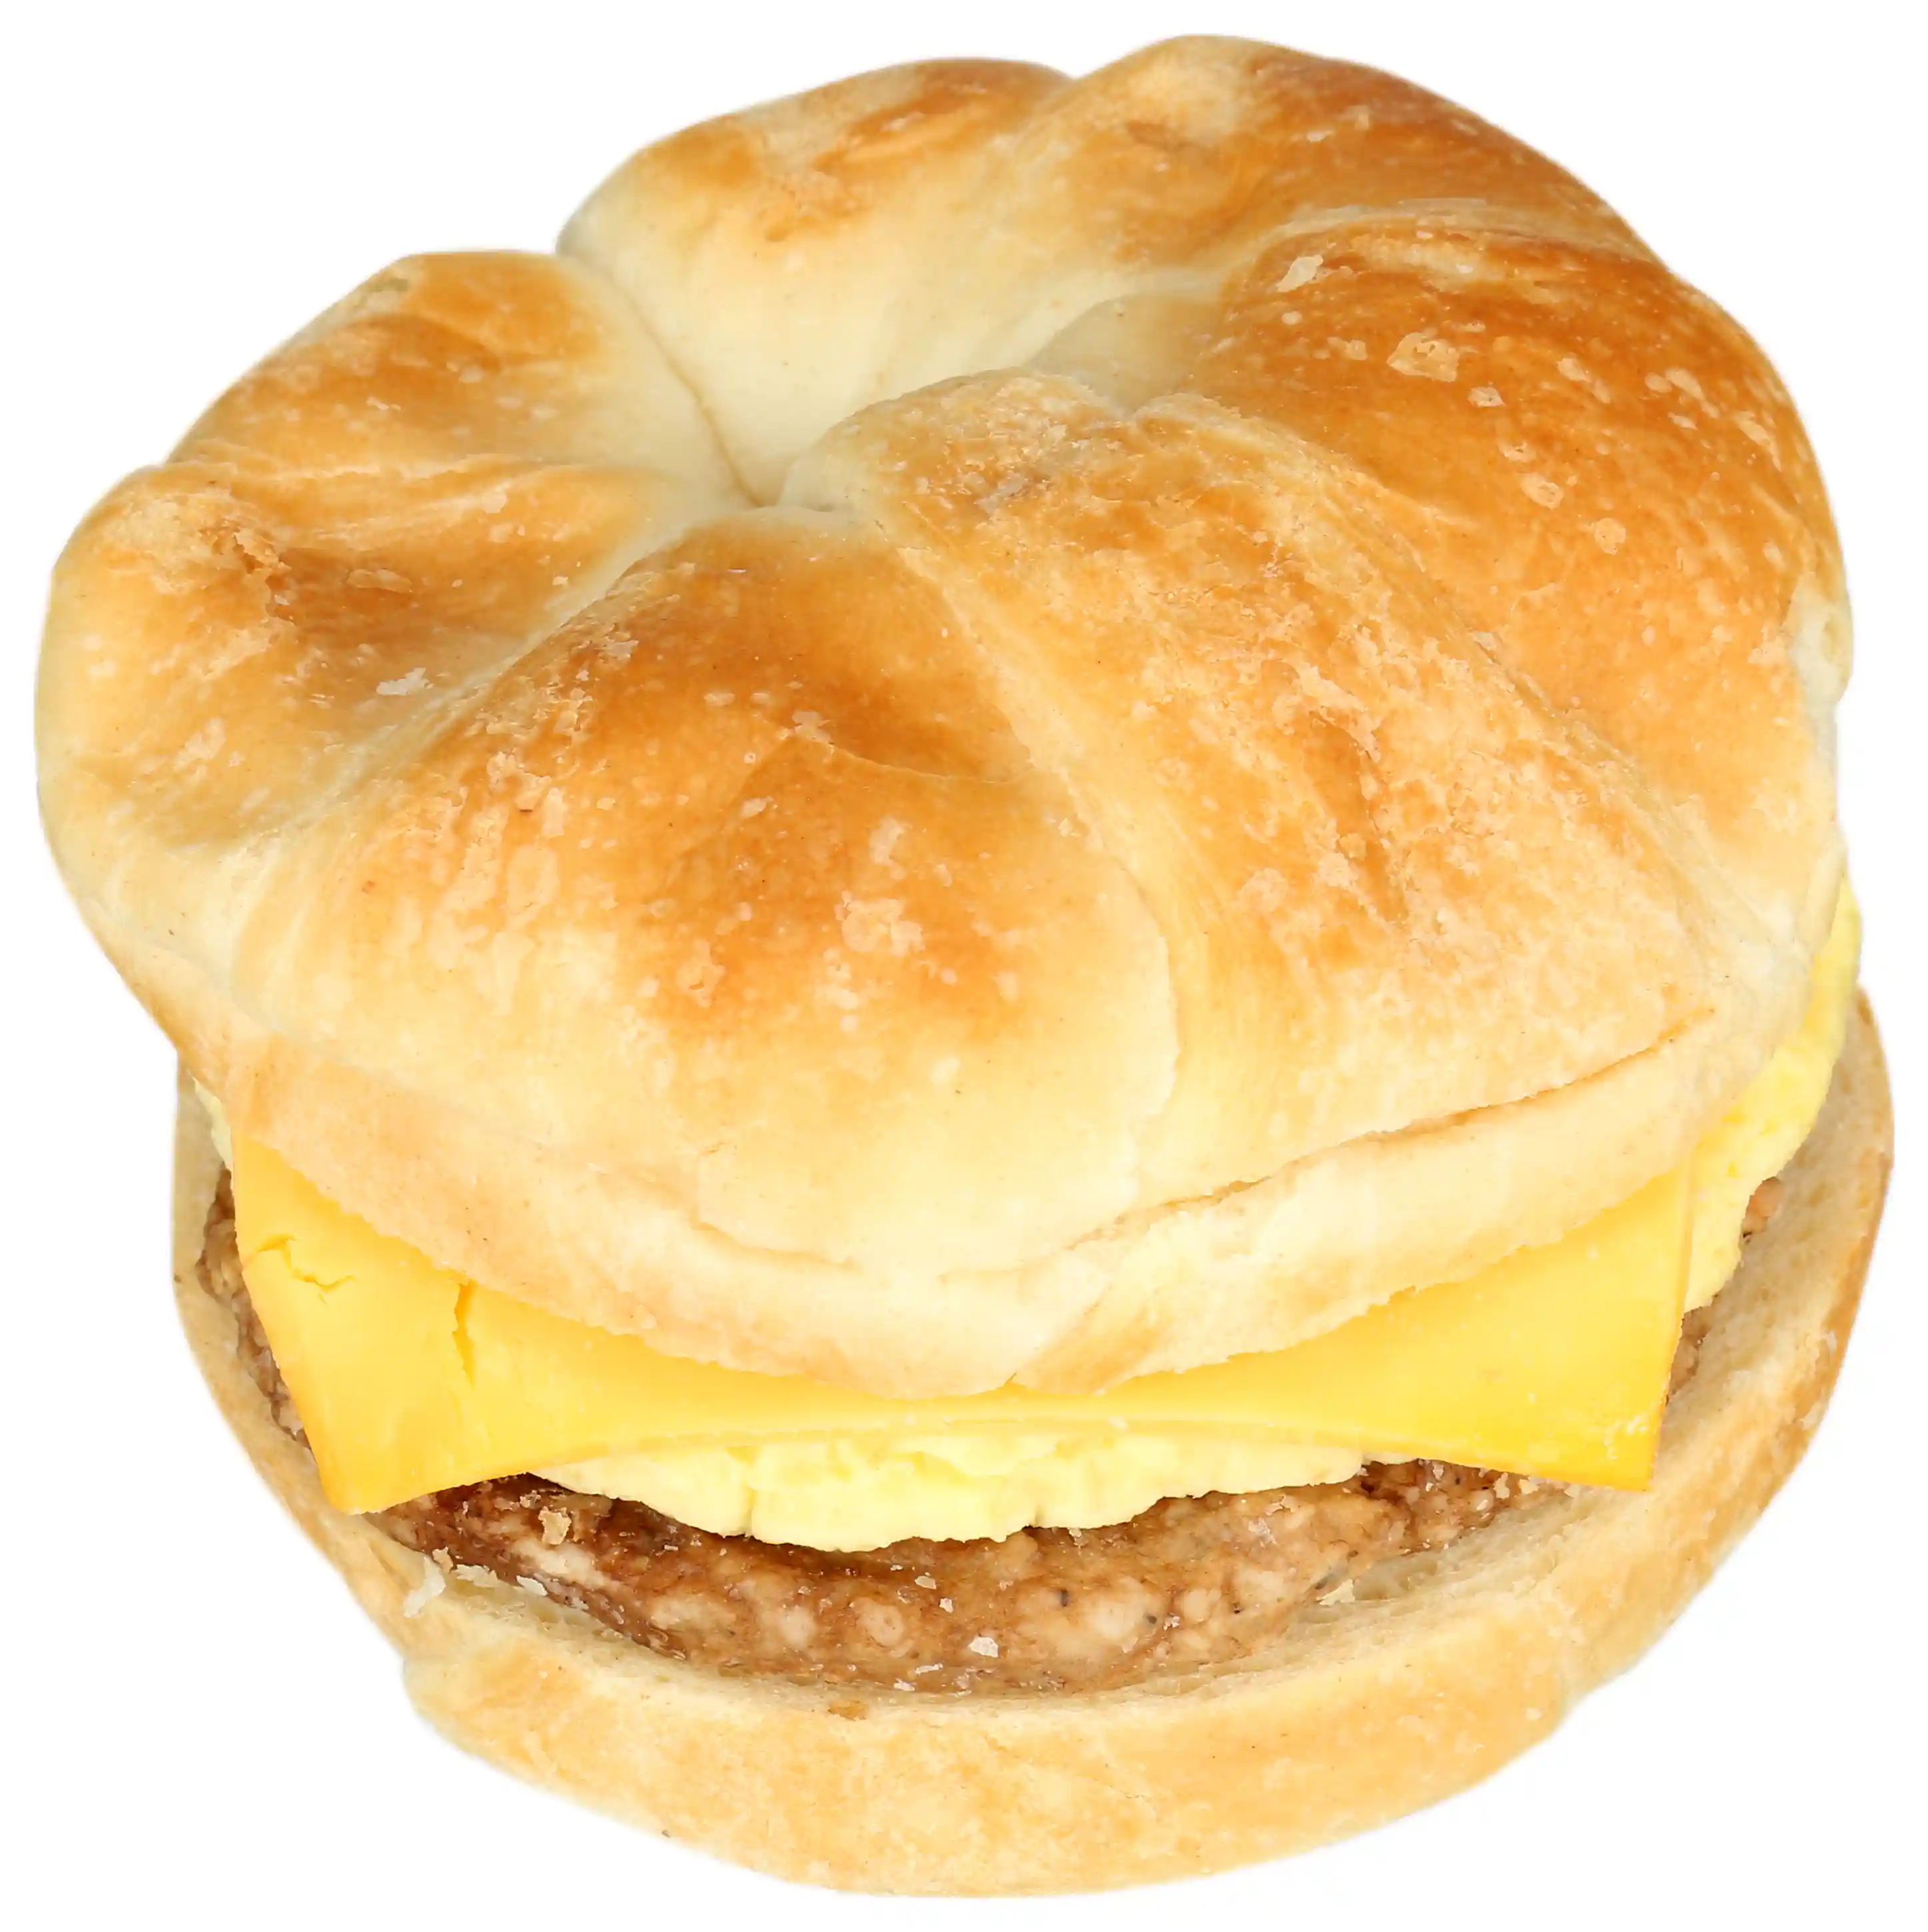 Jimmy Dean® Sausage, Egg and Cheese Croissant Sandwichhttps://images.salsify.com/image/upload/s--Ll12N_AD--/q_25/nvycefsrx2vkrqgxfsr8.webp